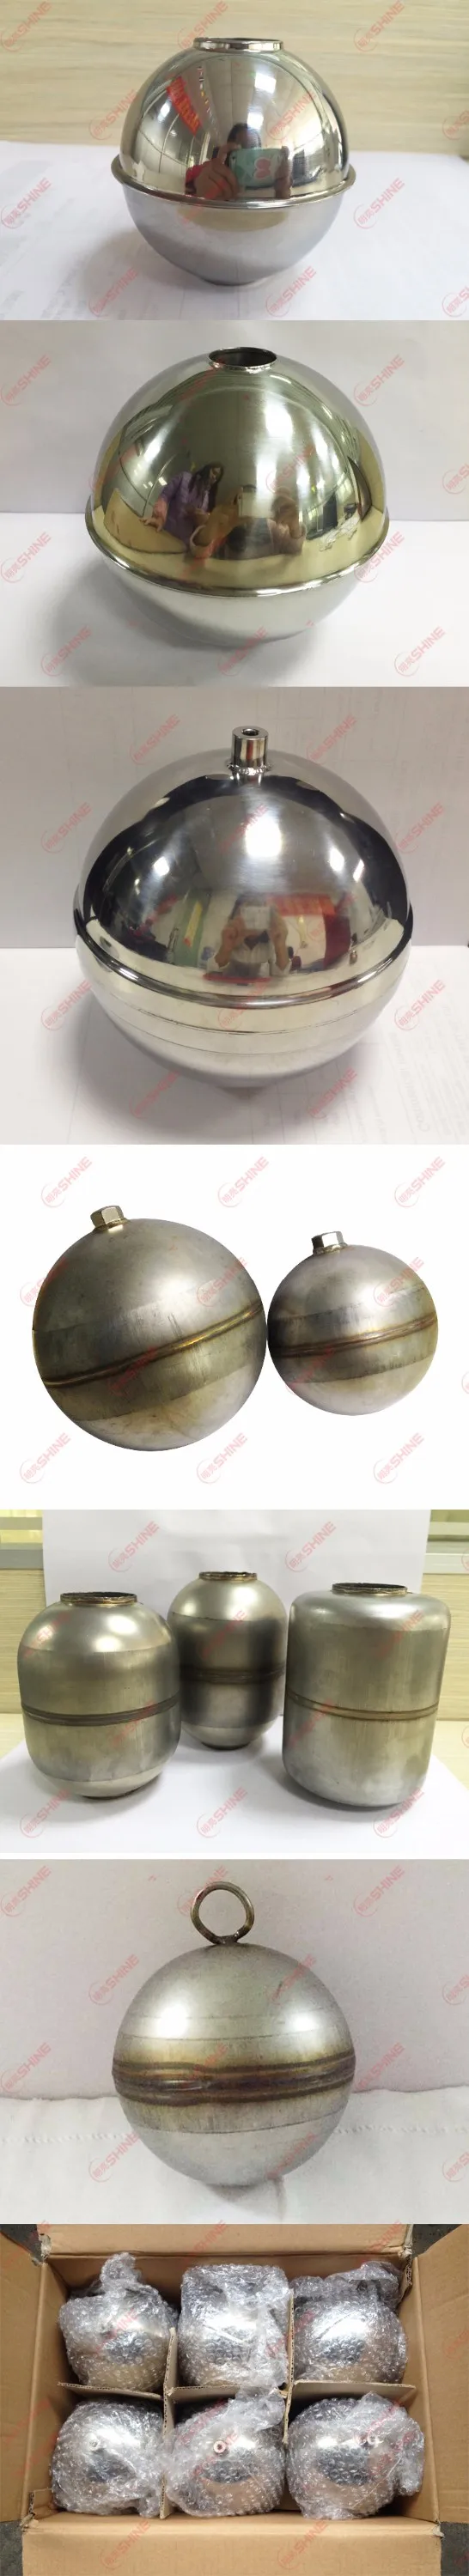 metal float ball.jpg